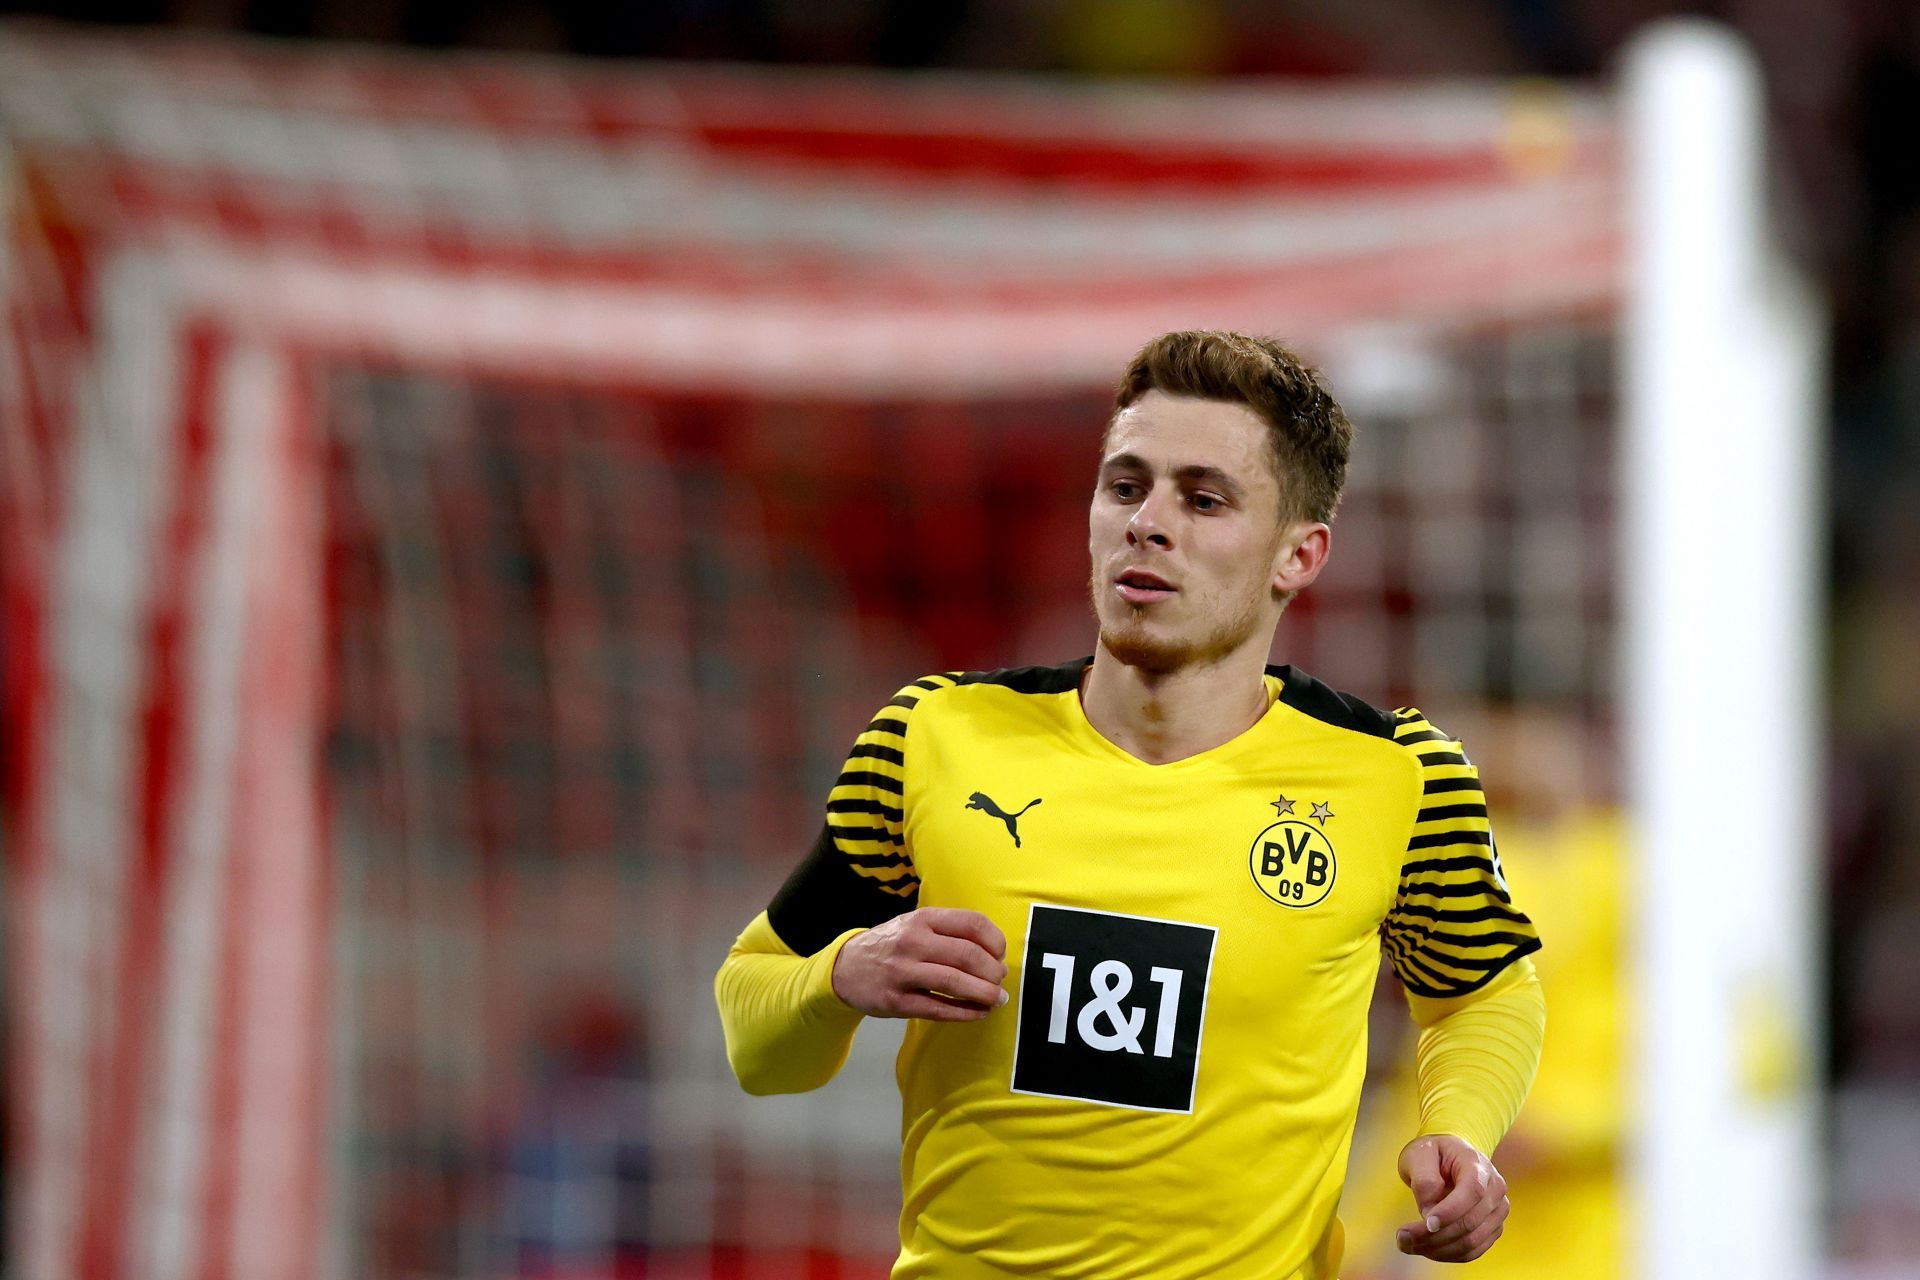 Borussia Dortmund play RB Leipzig on Saturday